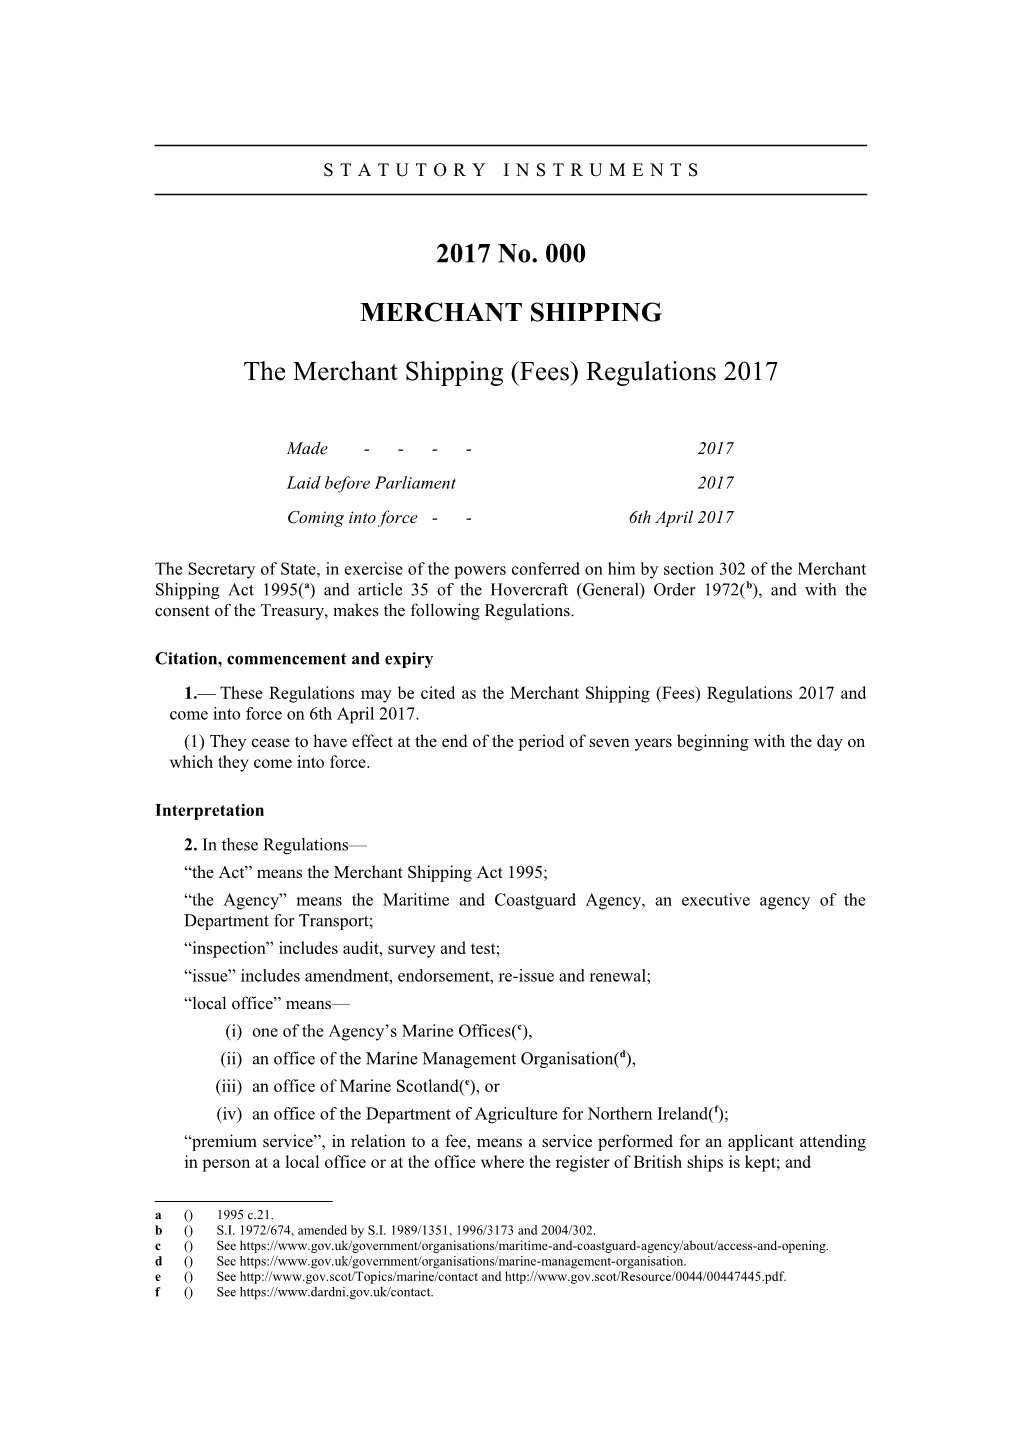 Themerchantshipping(Fees)Regulations2017